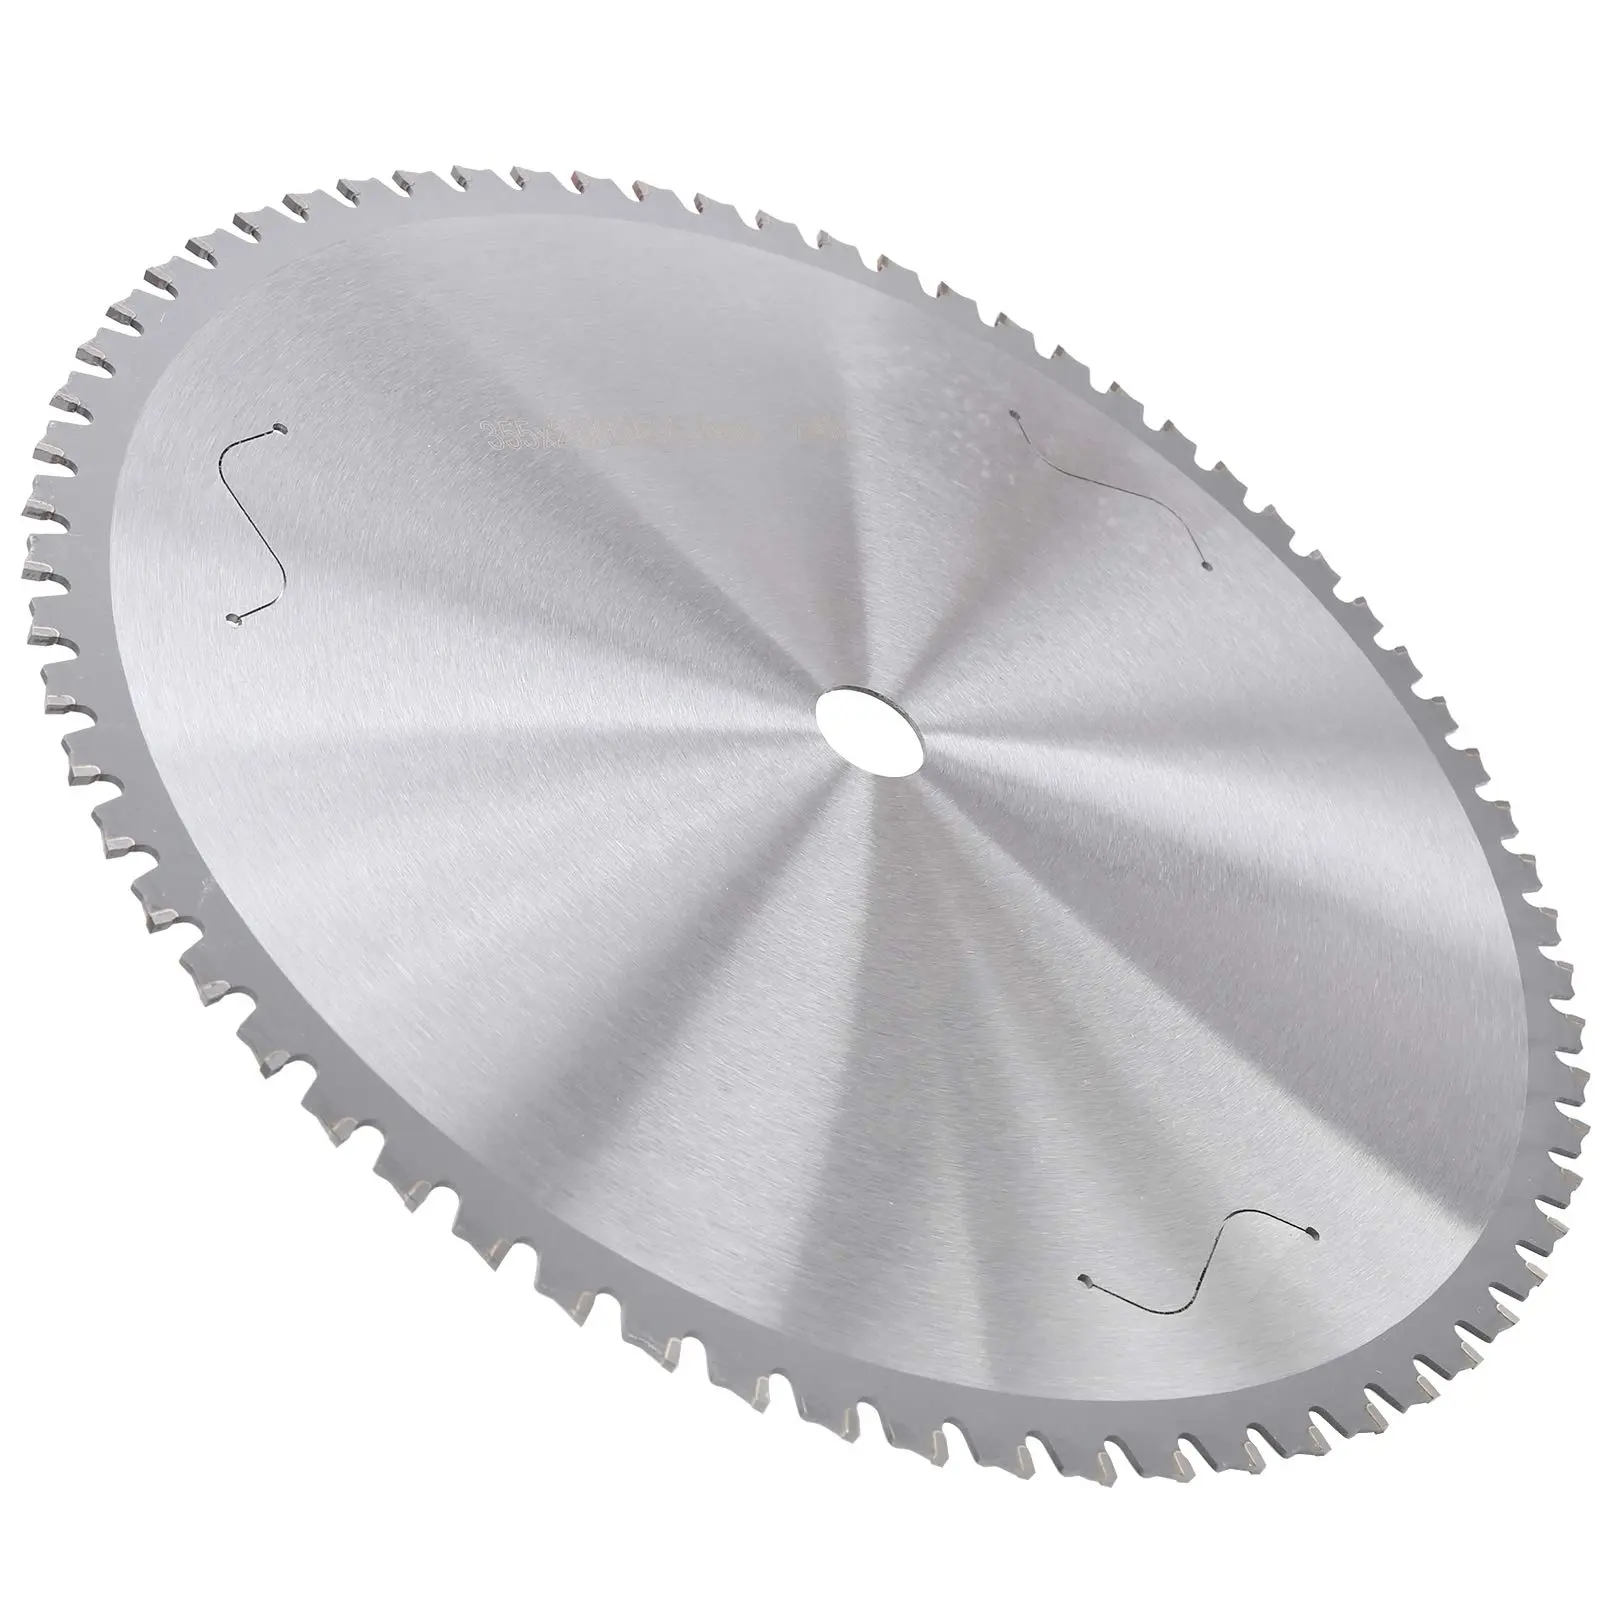 disco sierra circular 80 dientes - Qué disco usa una sierra circular